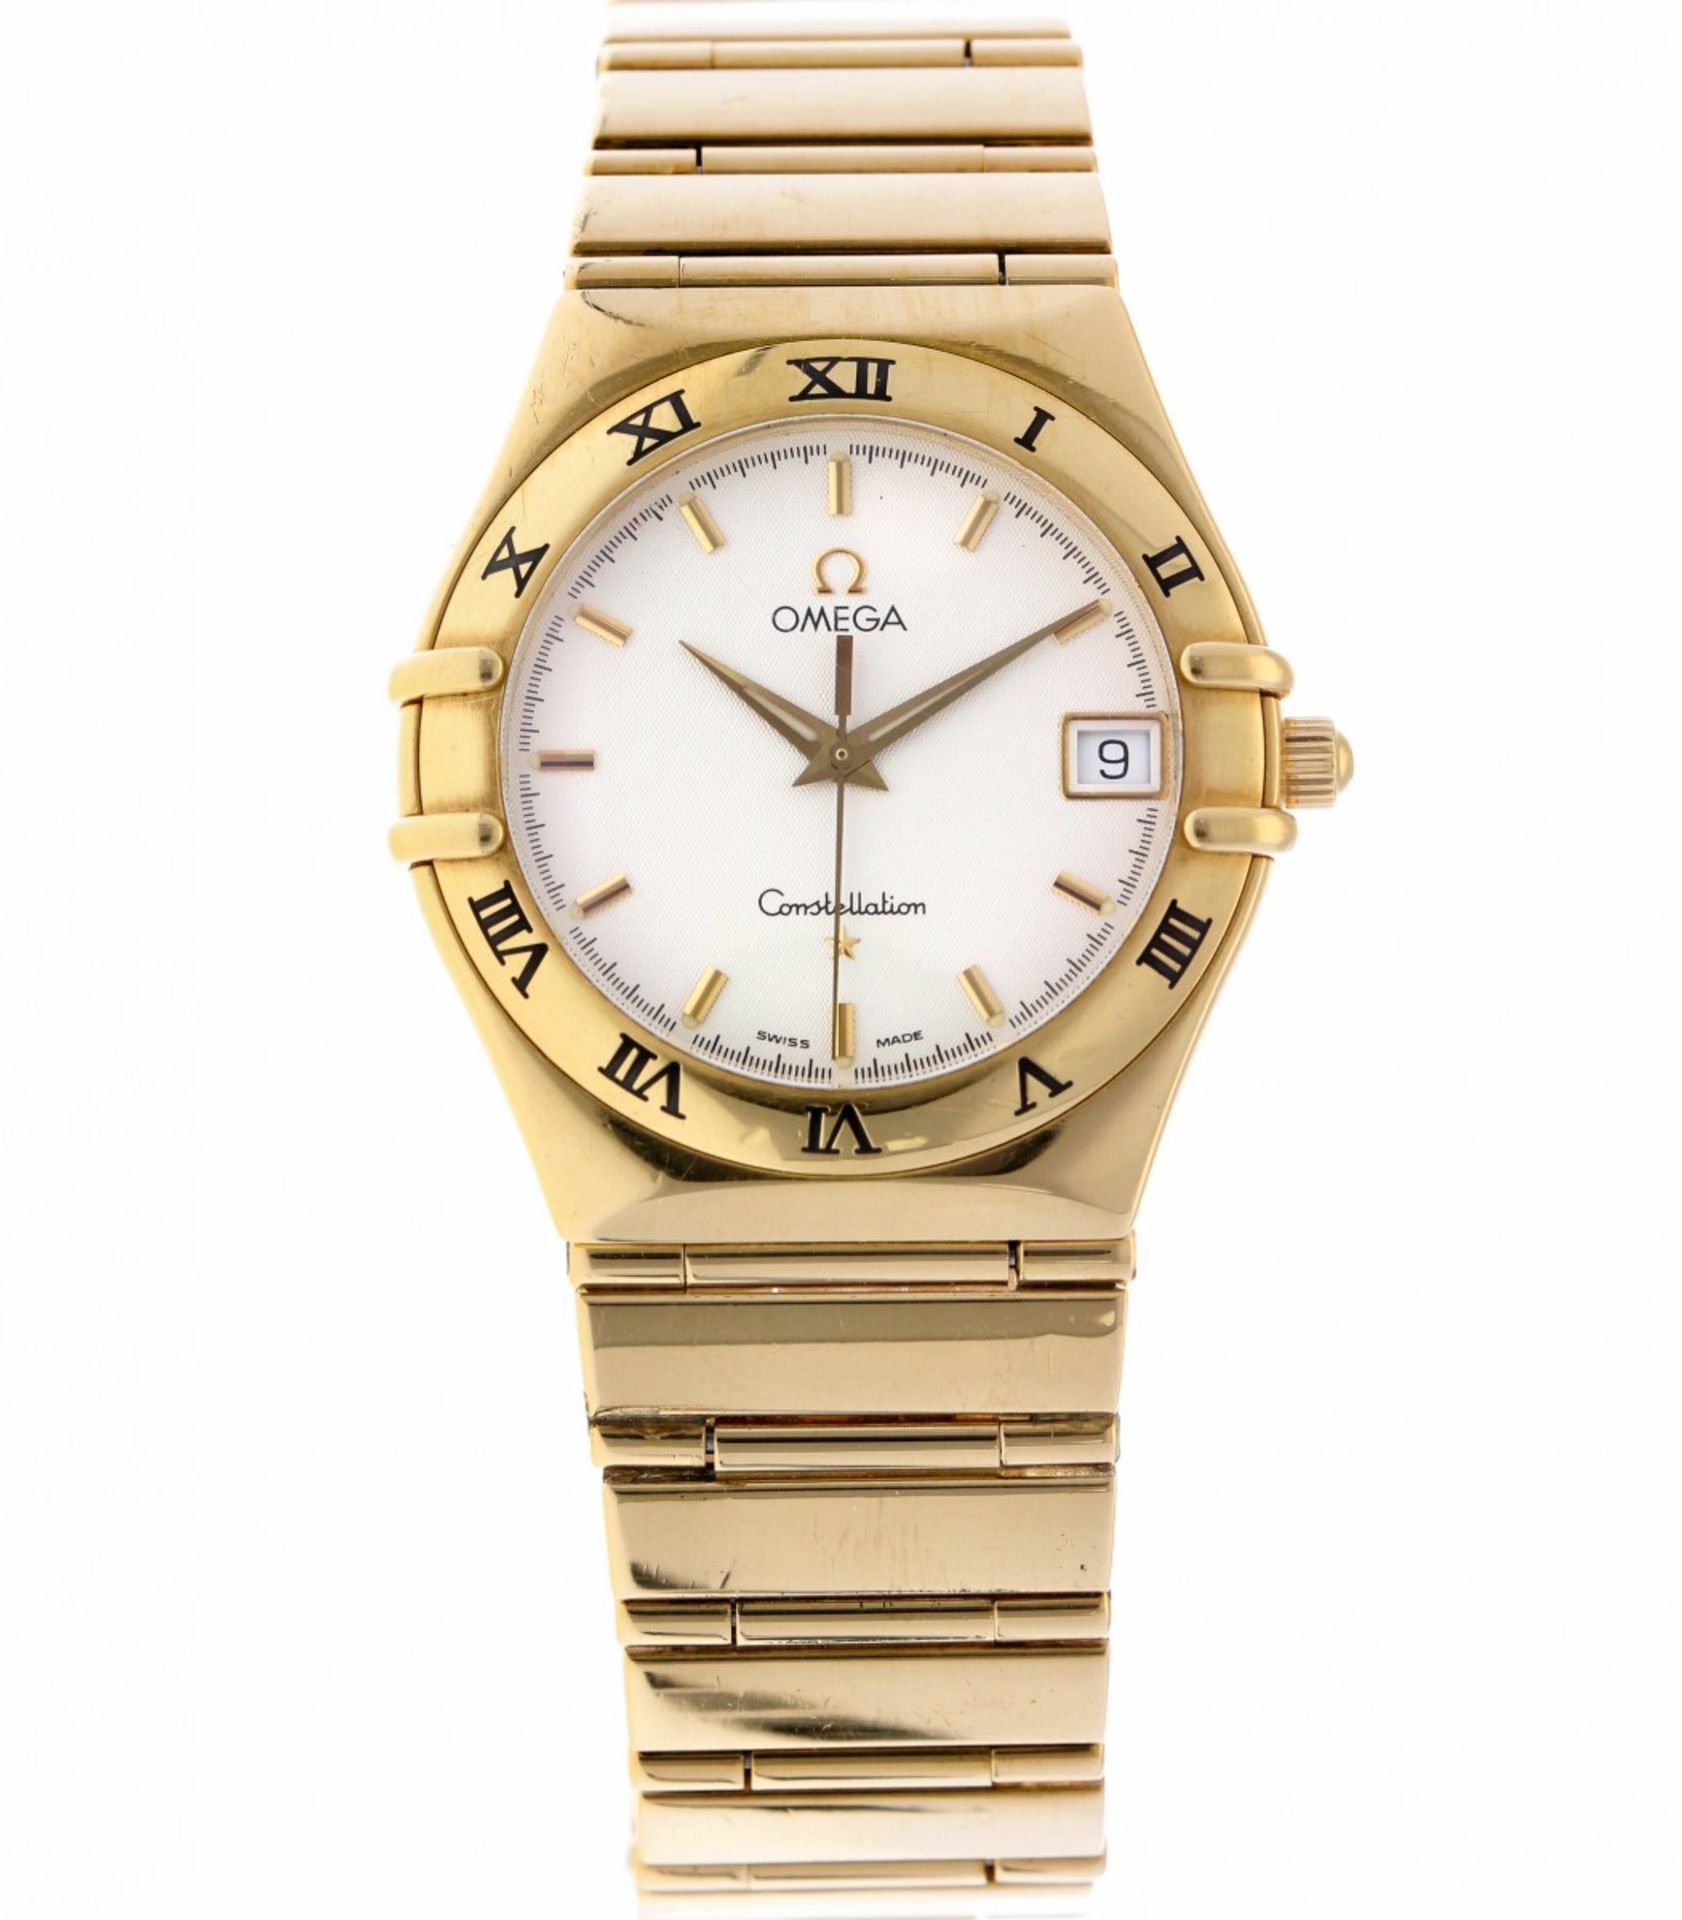 Omega Constellation 3961201 -Men's watch - ca. 1998